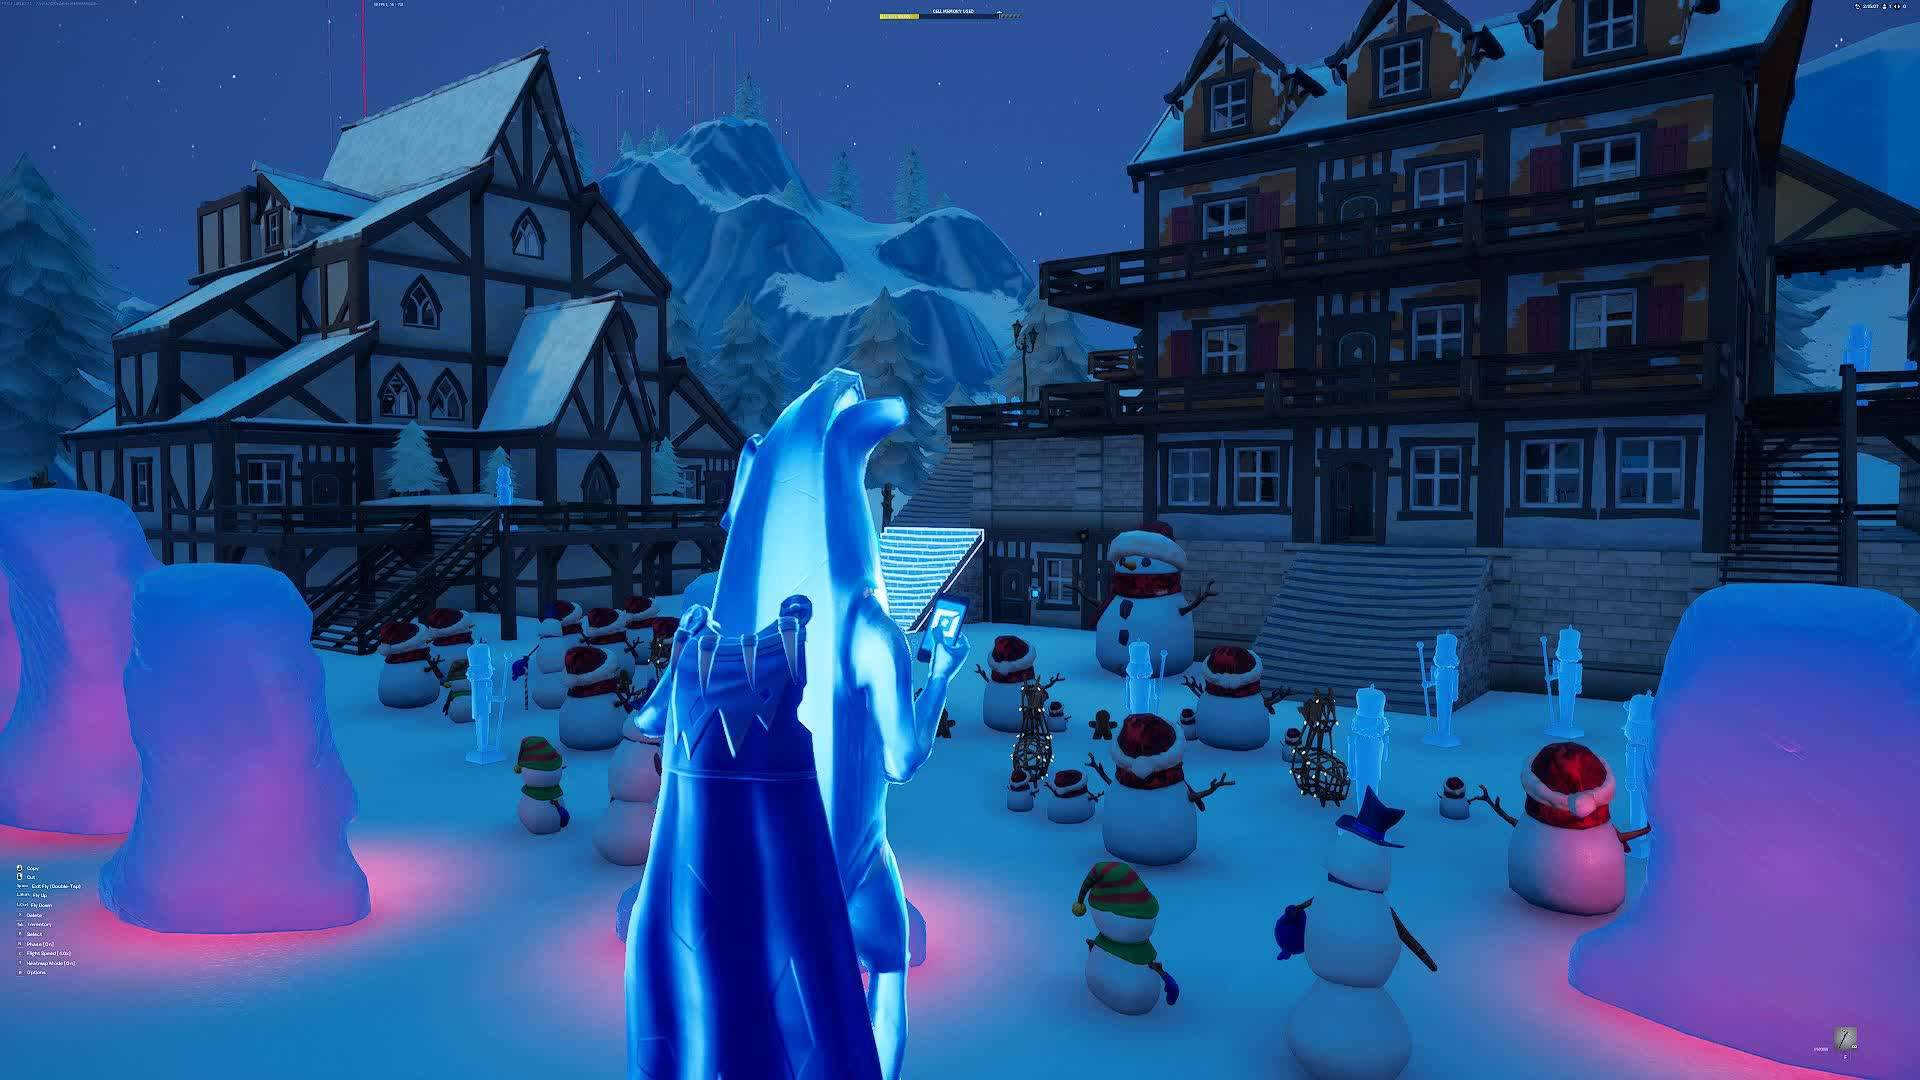 Snowman's Square PropHunt